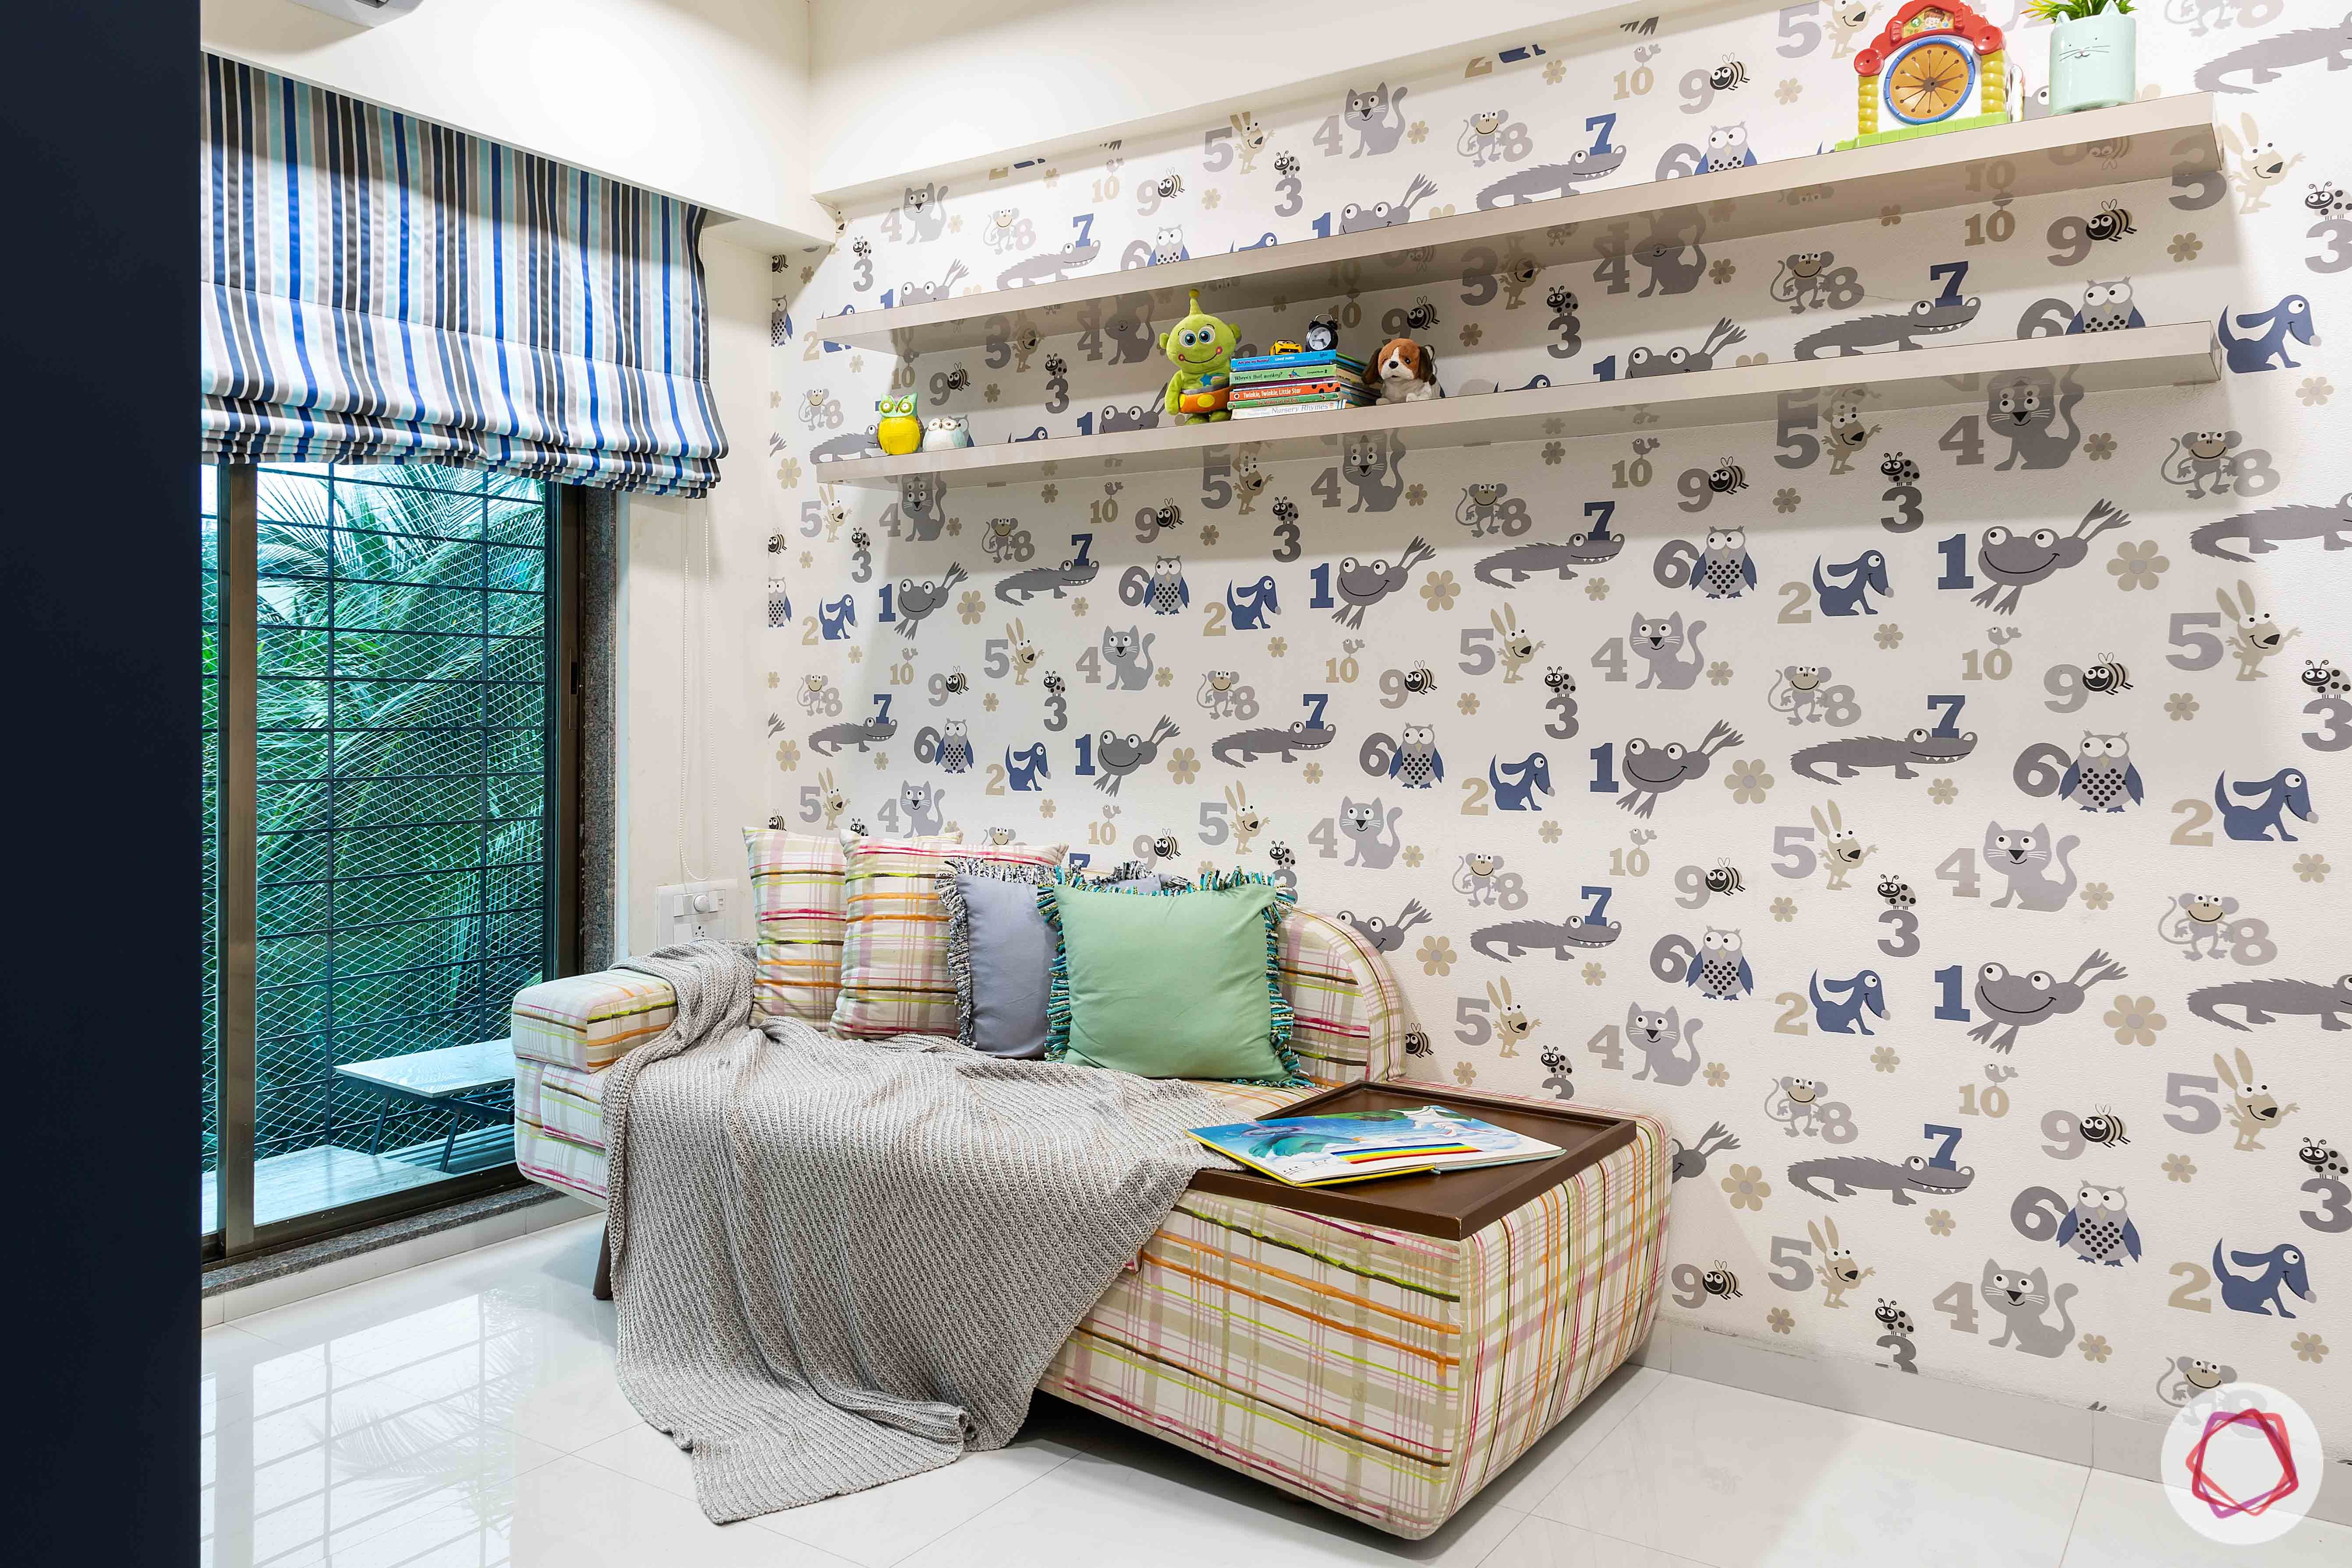 apartment interior design-kids room-wallpaper-display ledges